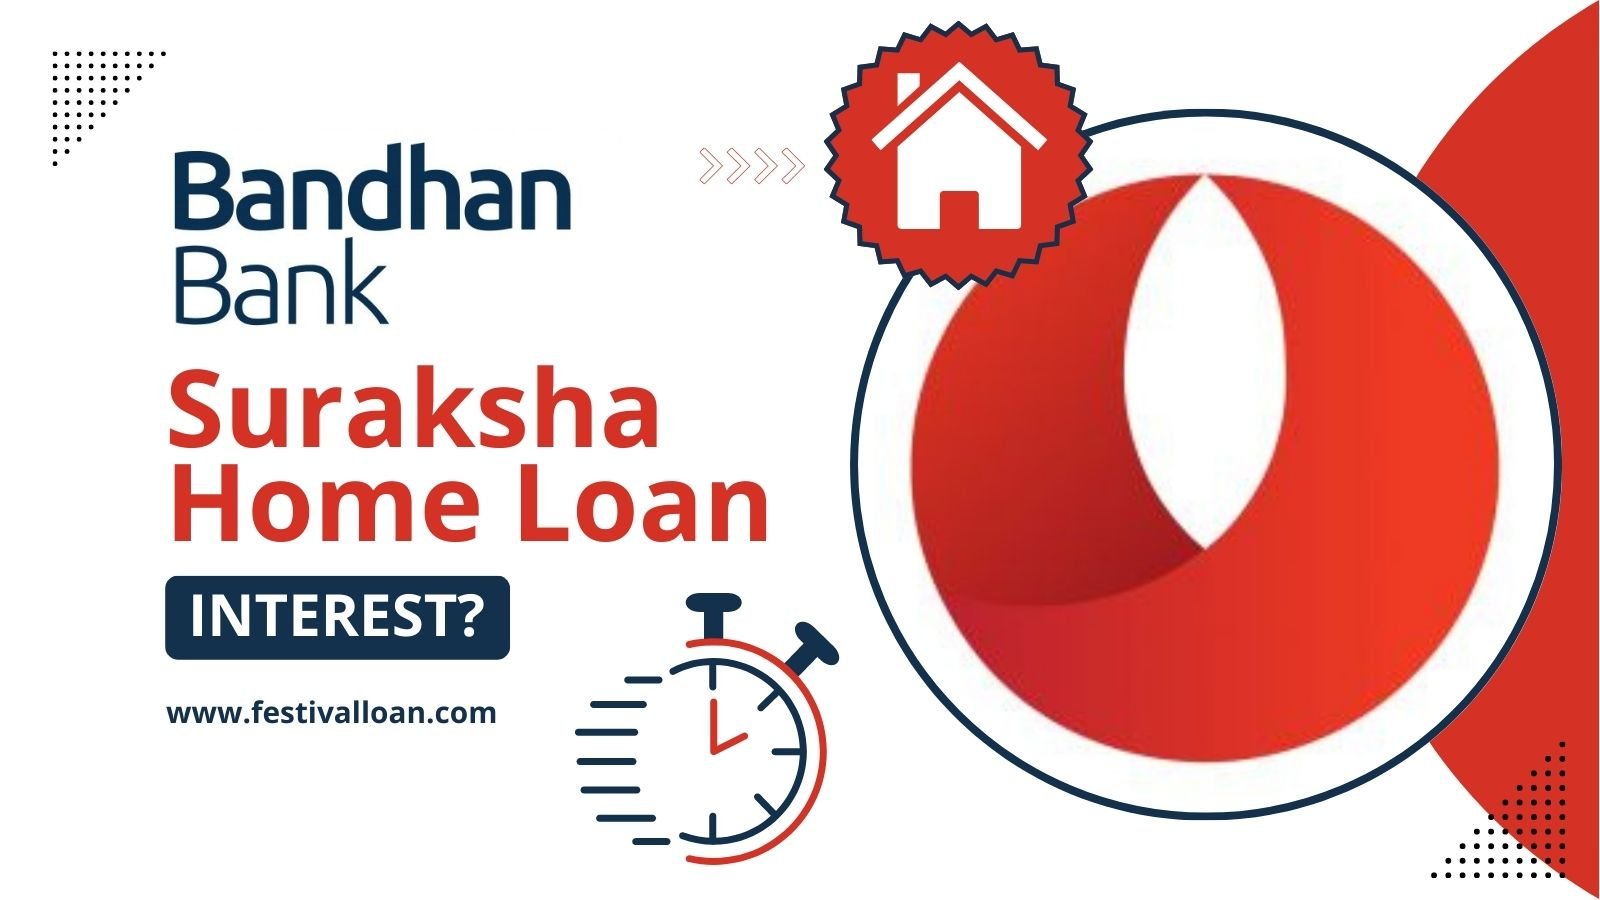 Bandhan Bank Suraksha Home Loan Interest Rate